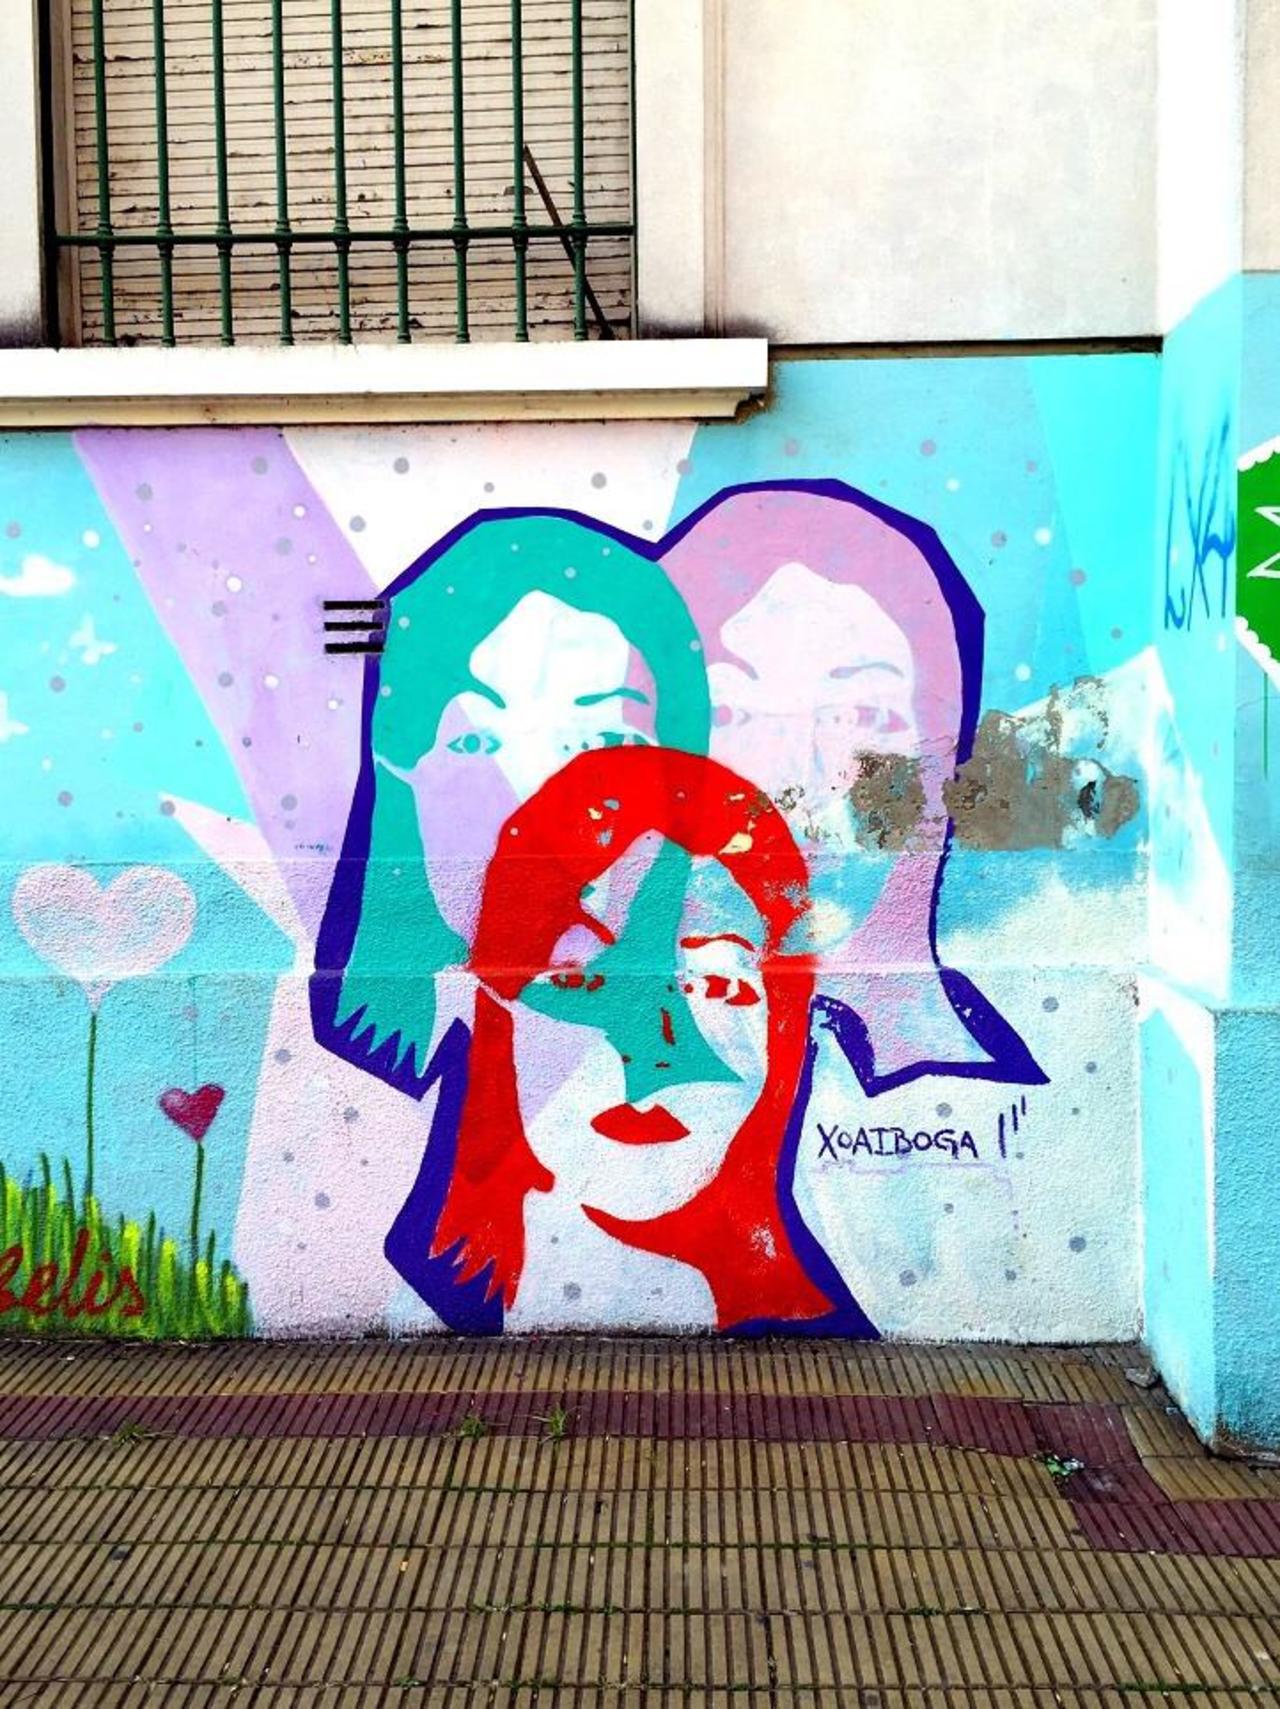 #Graffiti de hoy: << Lost love ghosts >> calle 66, 8y9 #LaPlata #Argentina #StreetArt #UrbanArt #ArteUrbano http://t.co/CEdoXQIBVu